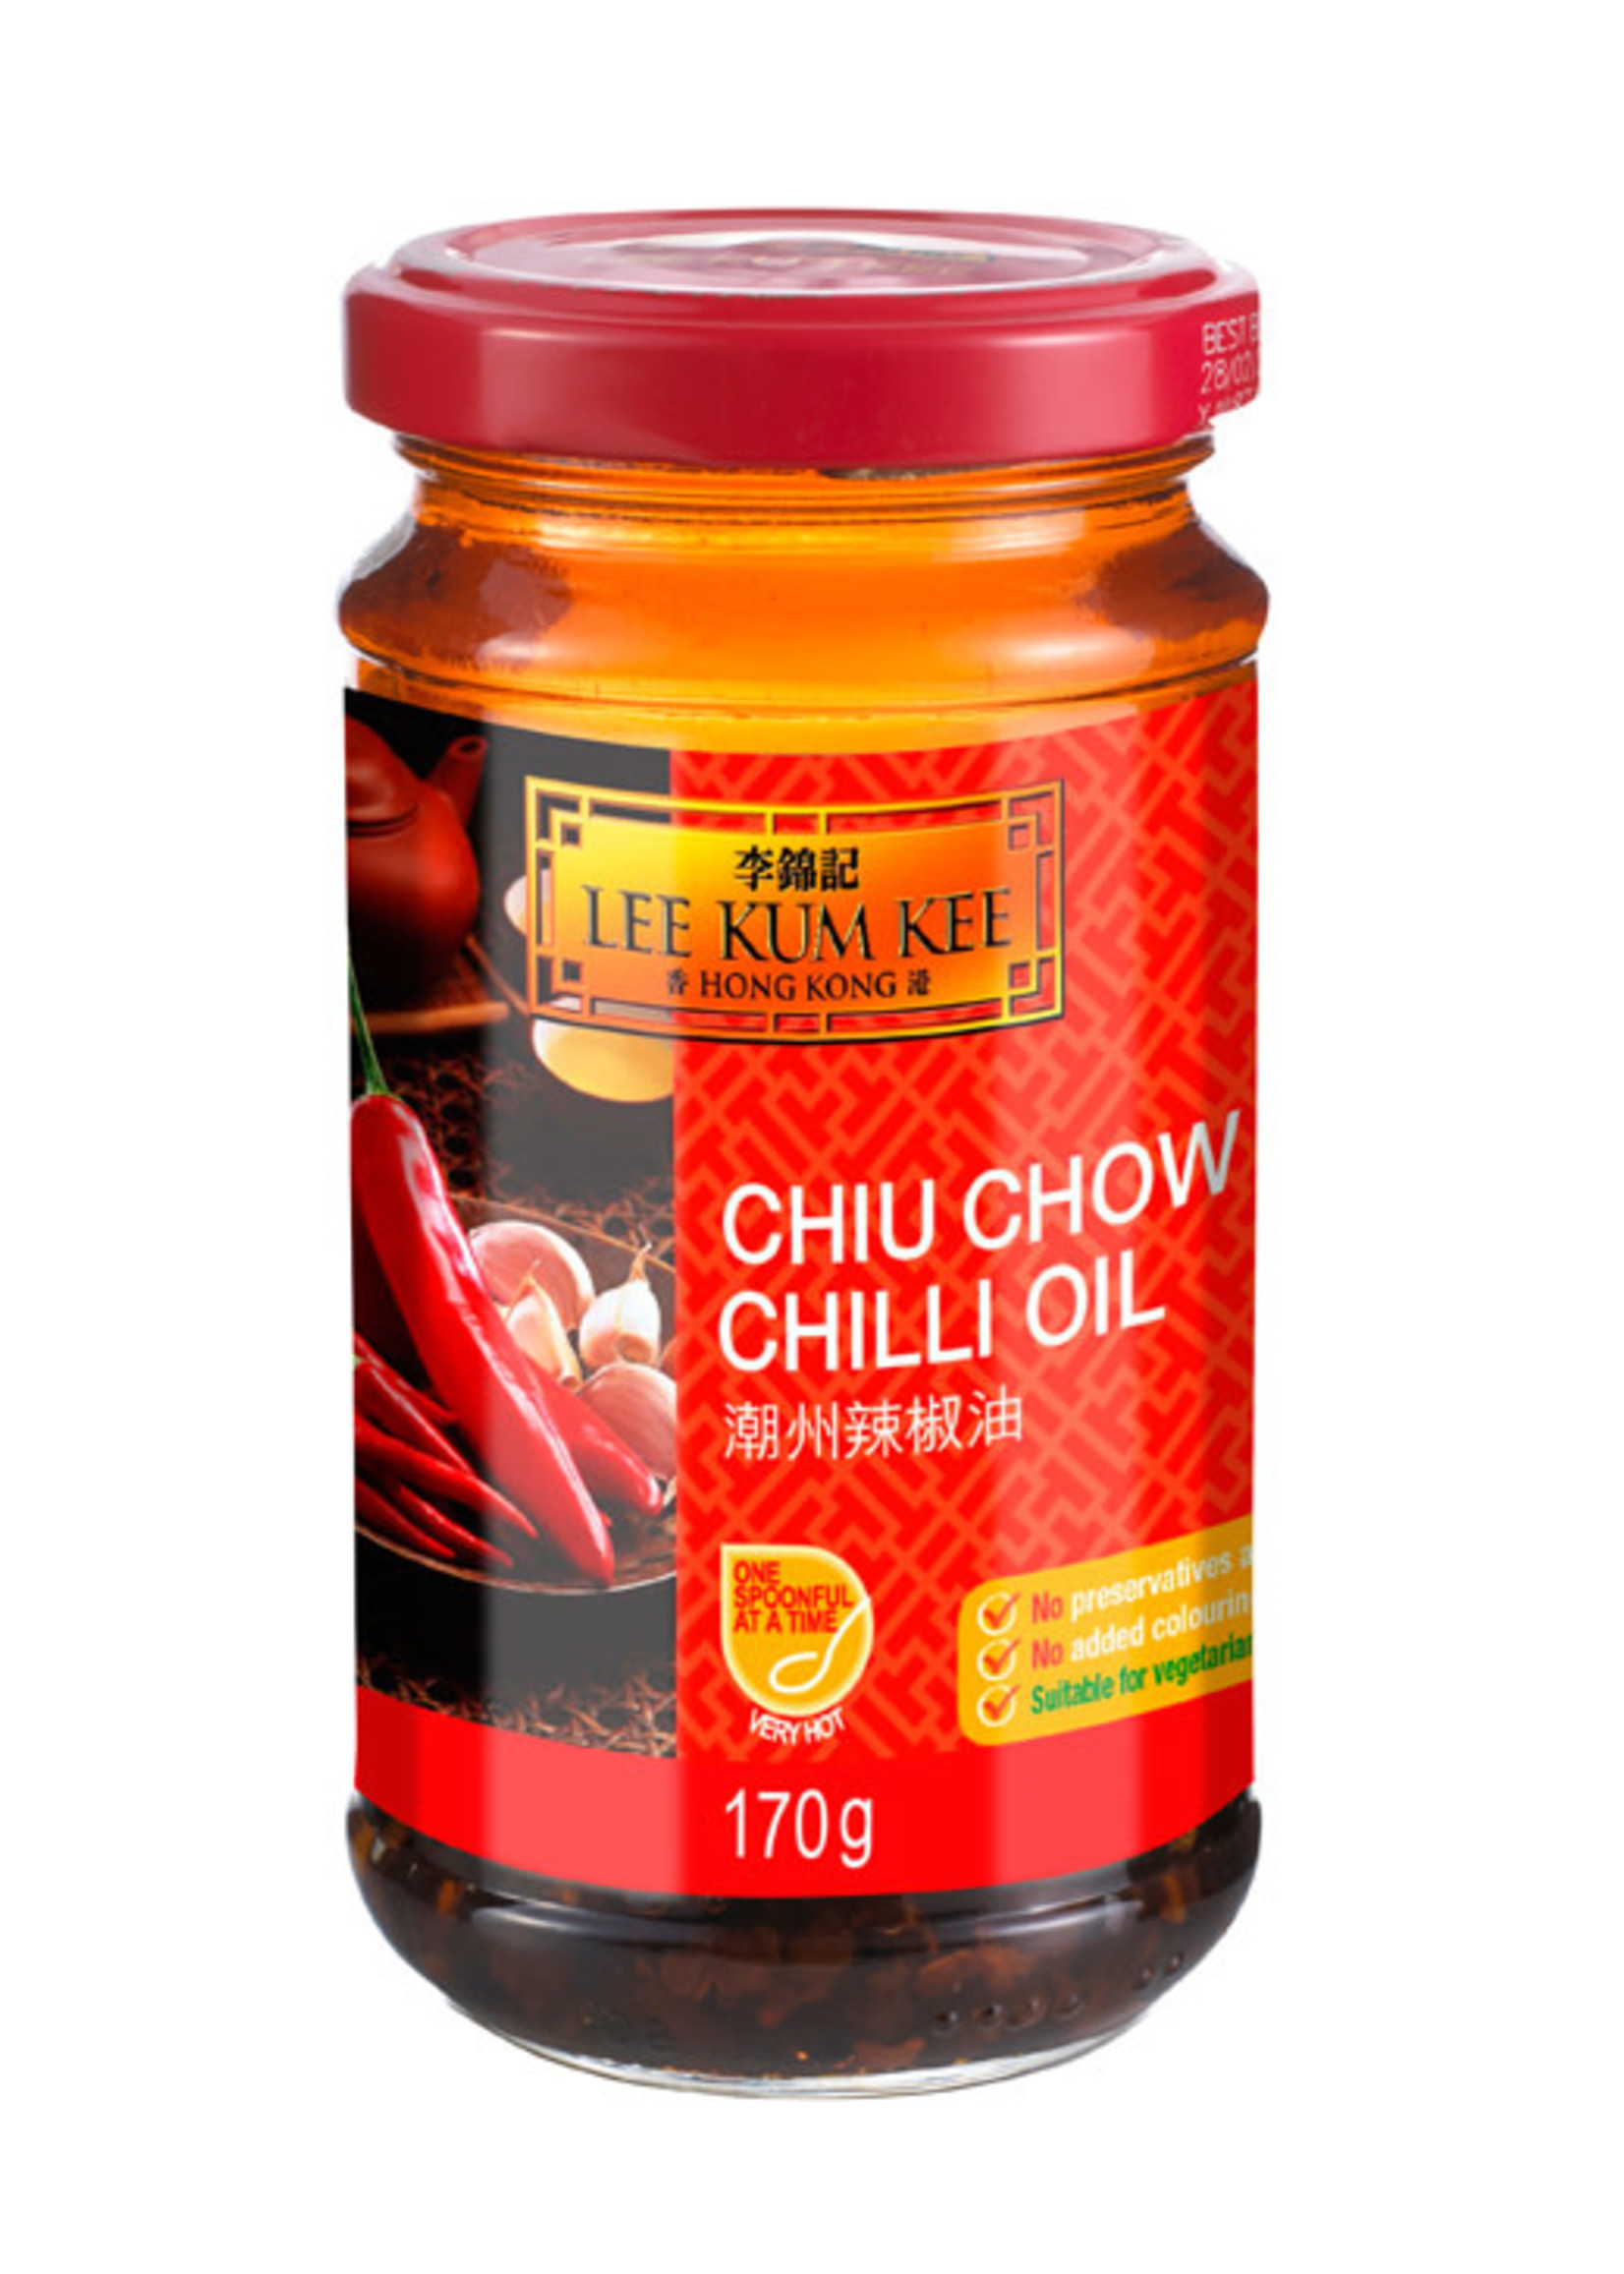 Lee Kum Kee Lee Kum Kee Chiu Chow chili-oil 170g